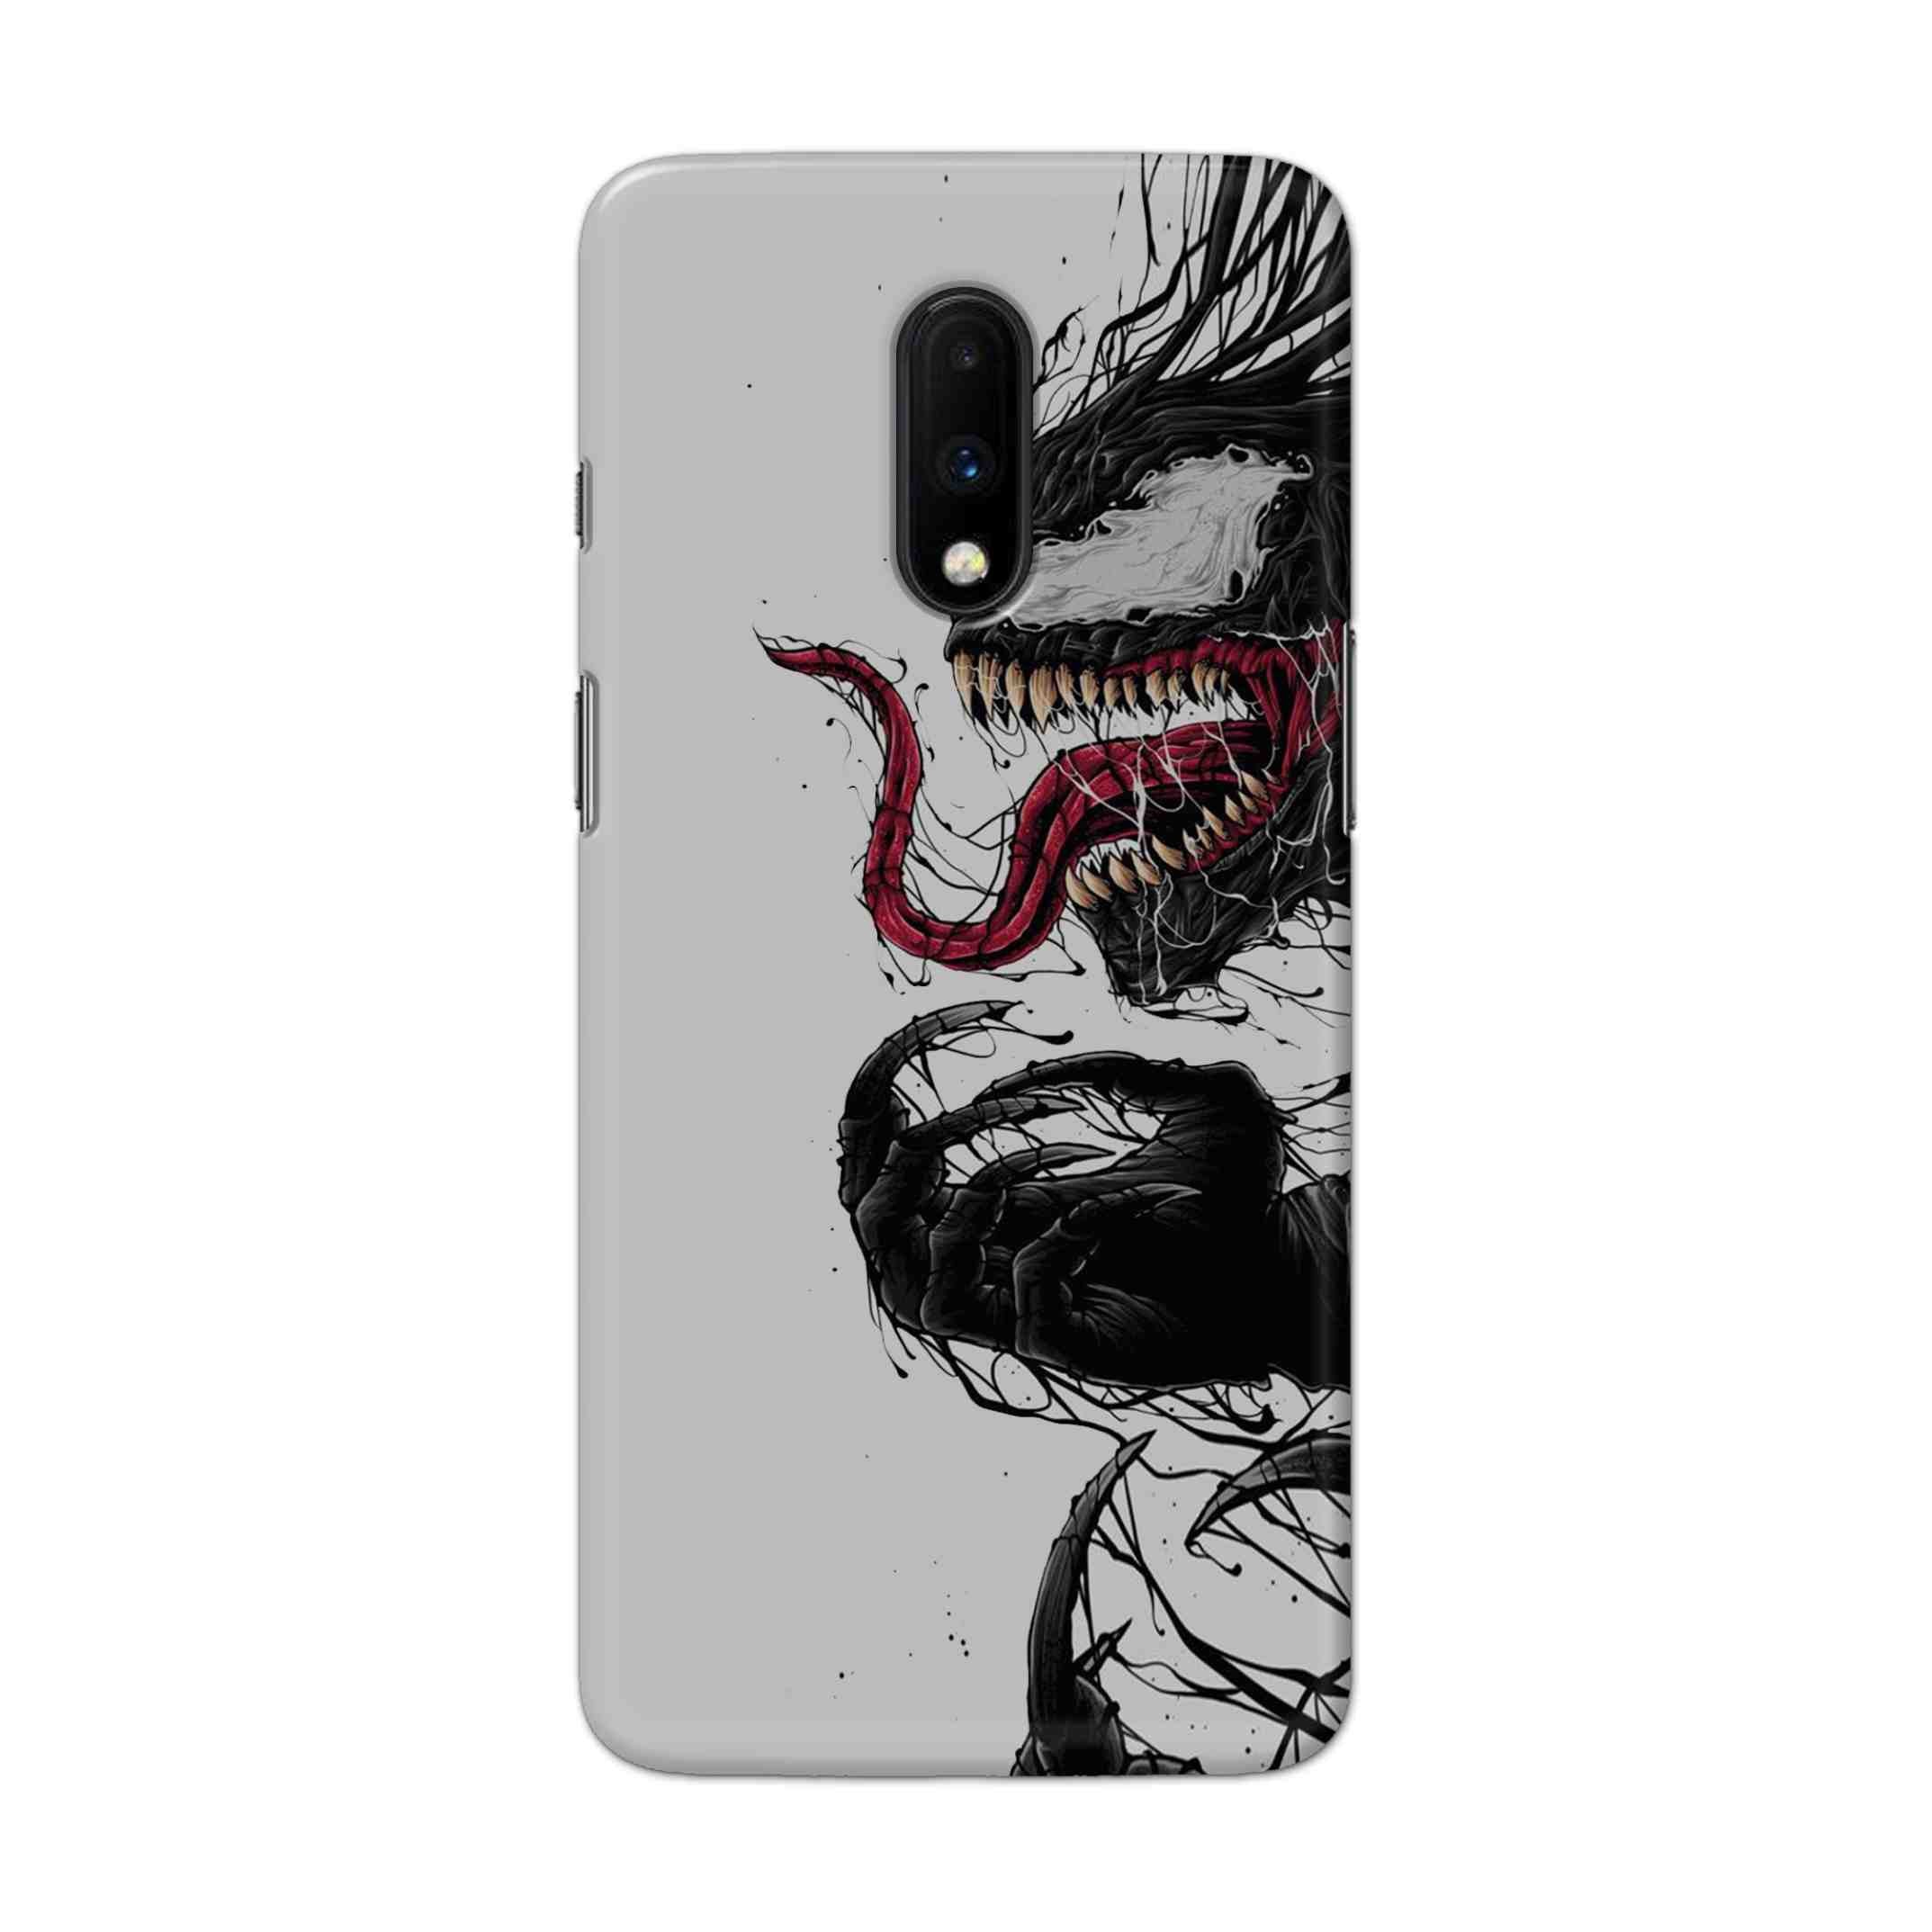 Buy Venom Crazy Hard Back Mobile Phone Case Cover For OnePlus 7 Online